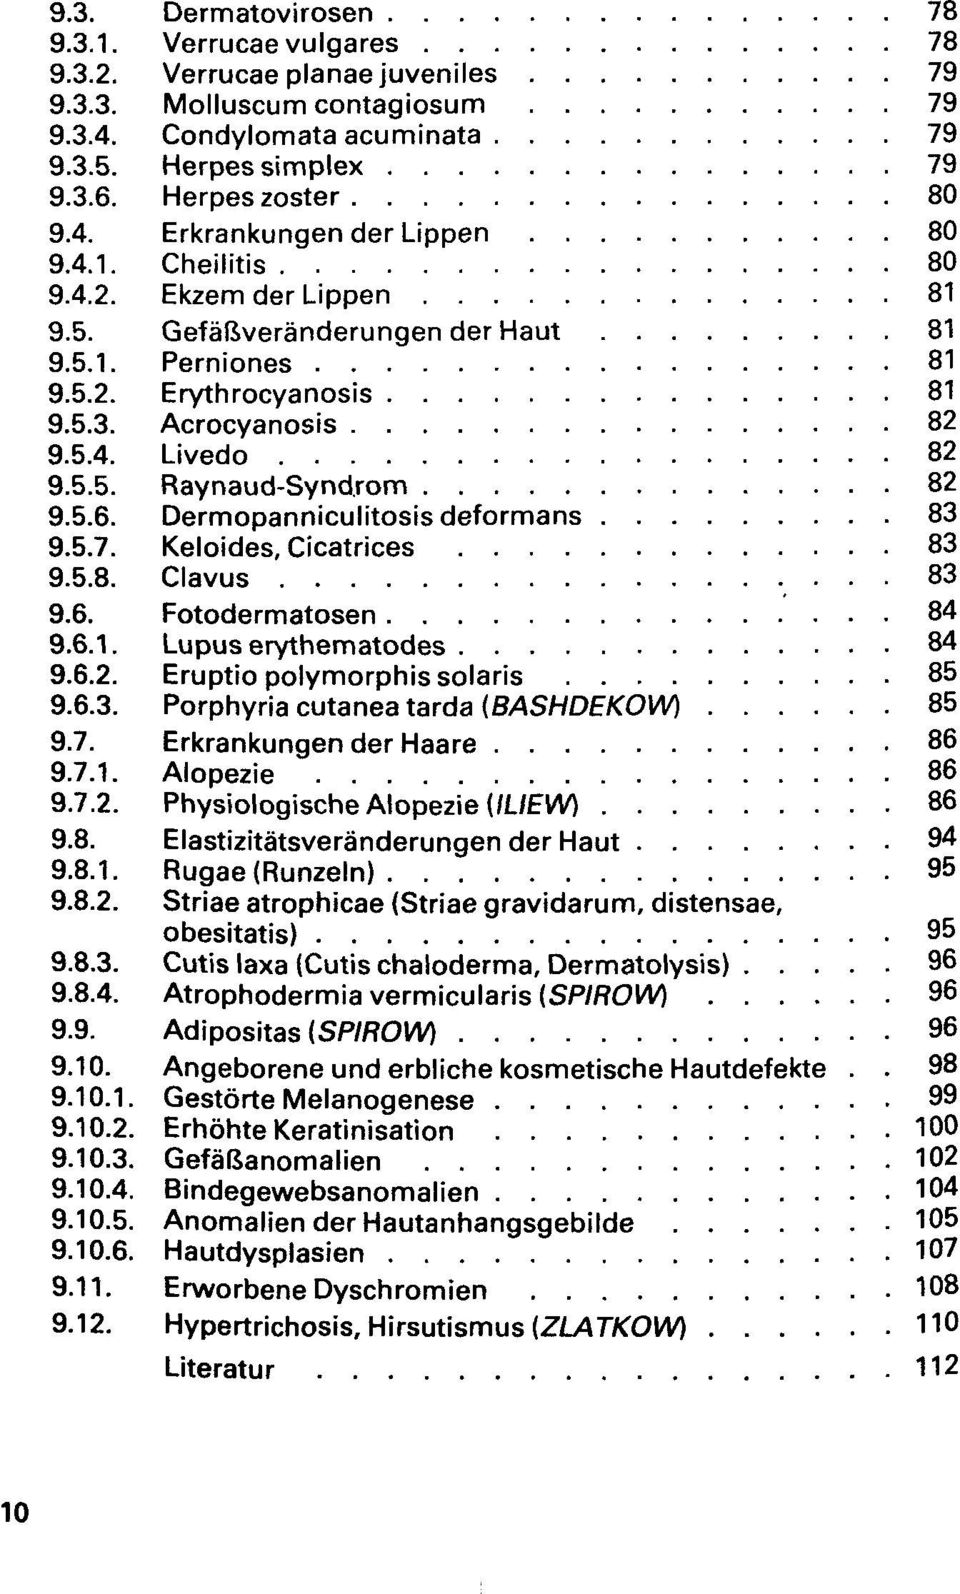 Acrocyanosis 82 9.5.4. Livedo 82 9.5.5. Raynaud-Syndrom 82 9.5.6. Dermopanniculitosisdeformans 83 9.5.7. Keloides, Cicatrices 83 9.5.8. Clavus 83 9.6. Fotodermatosen 84 9.6.1.